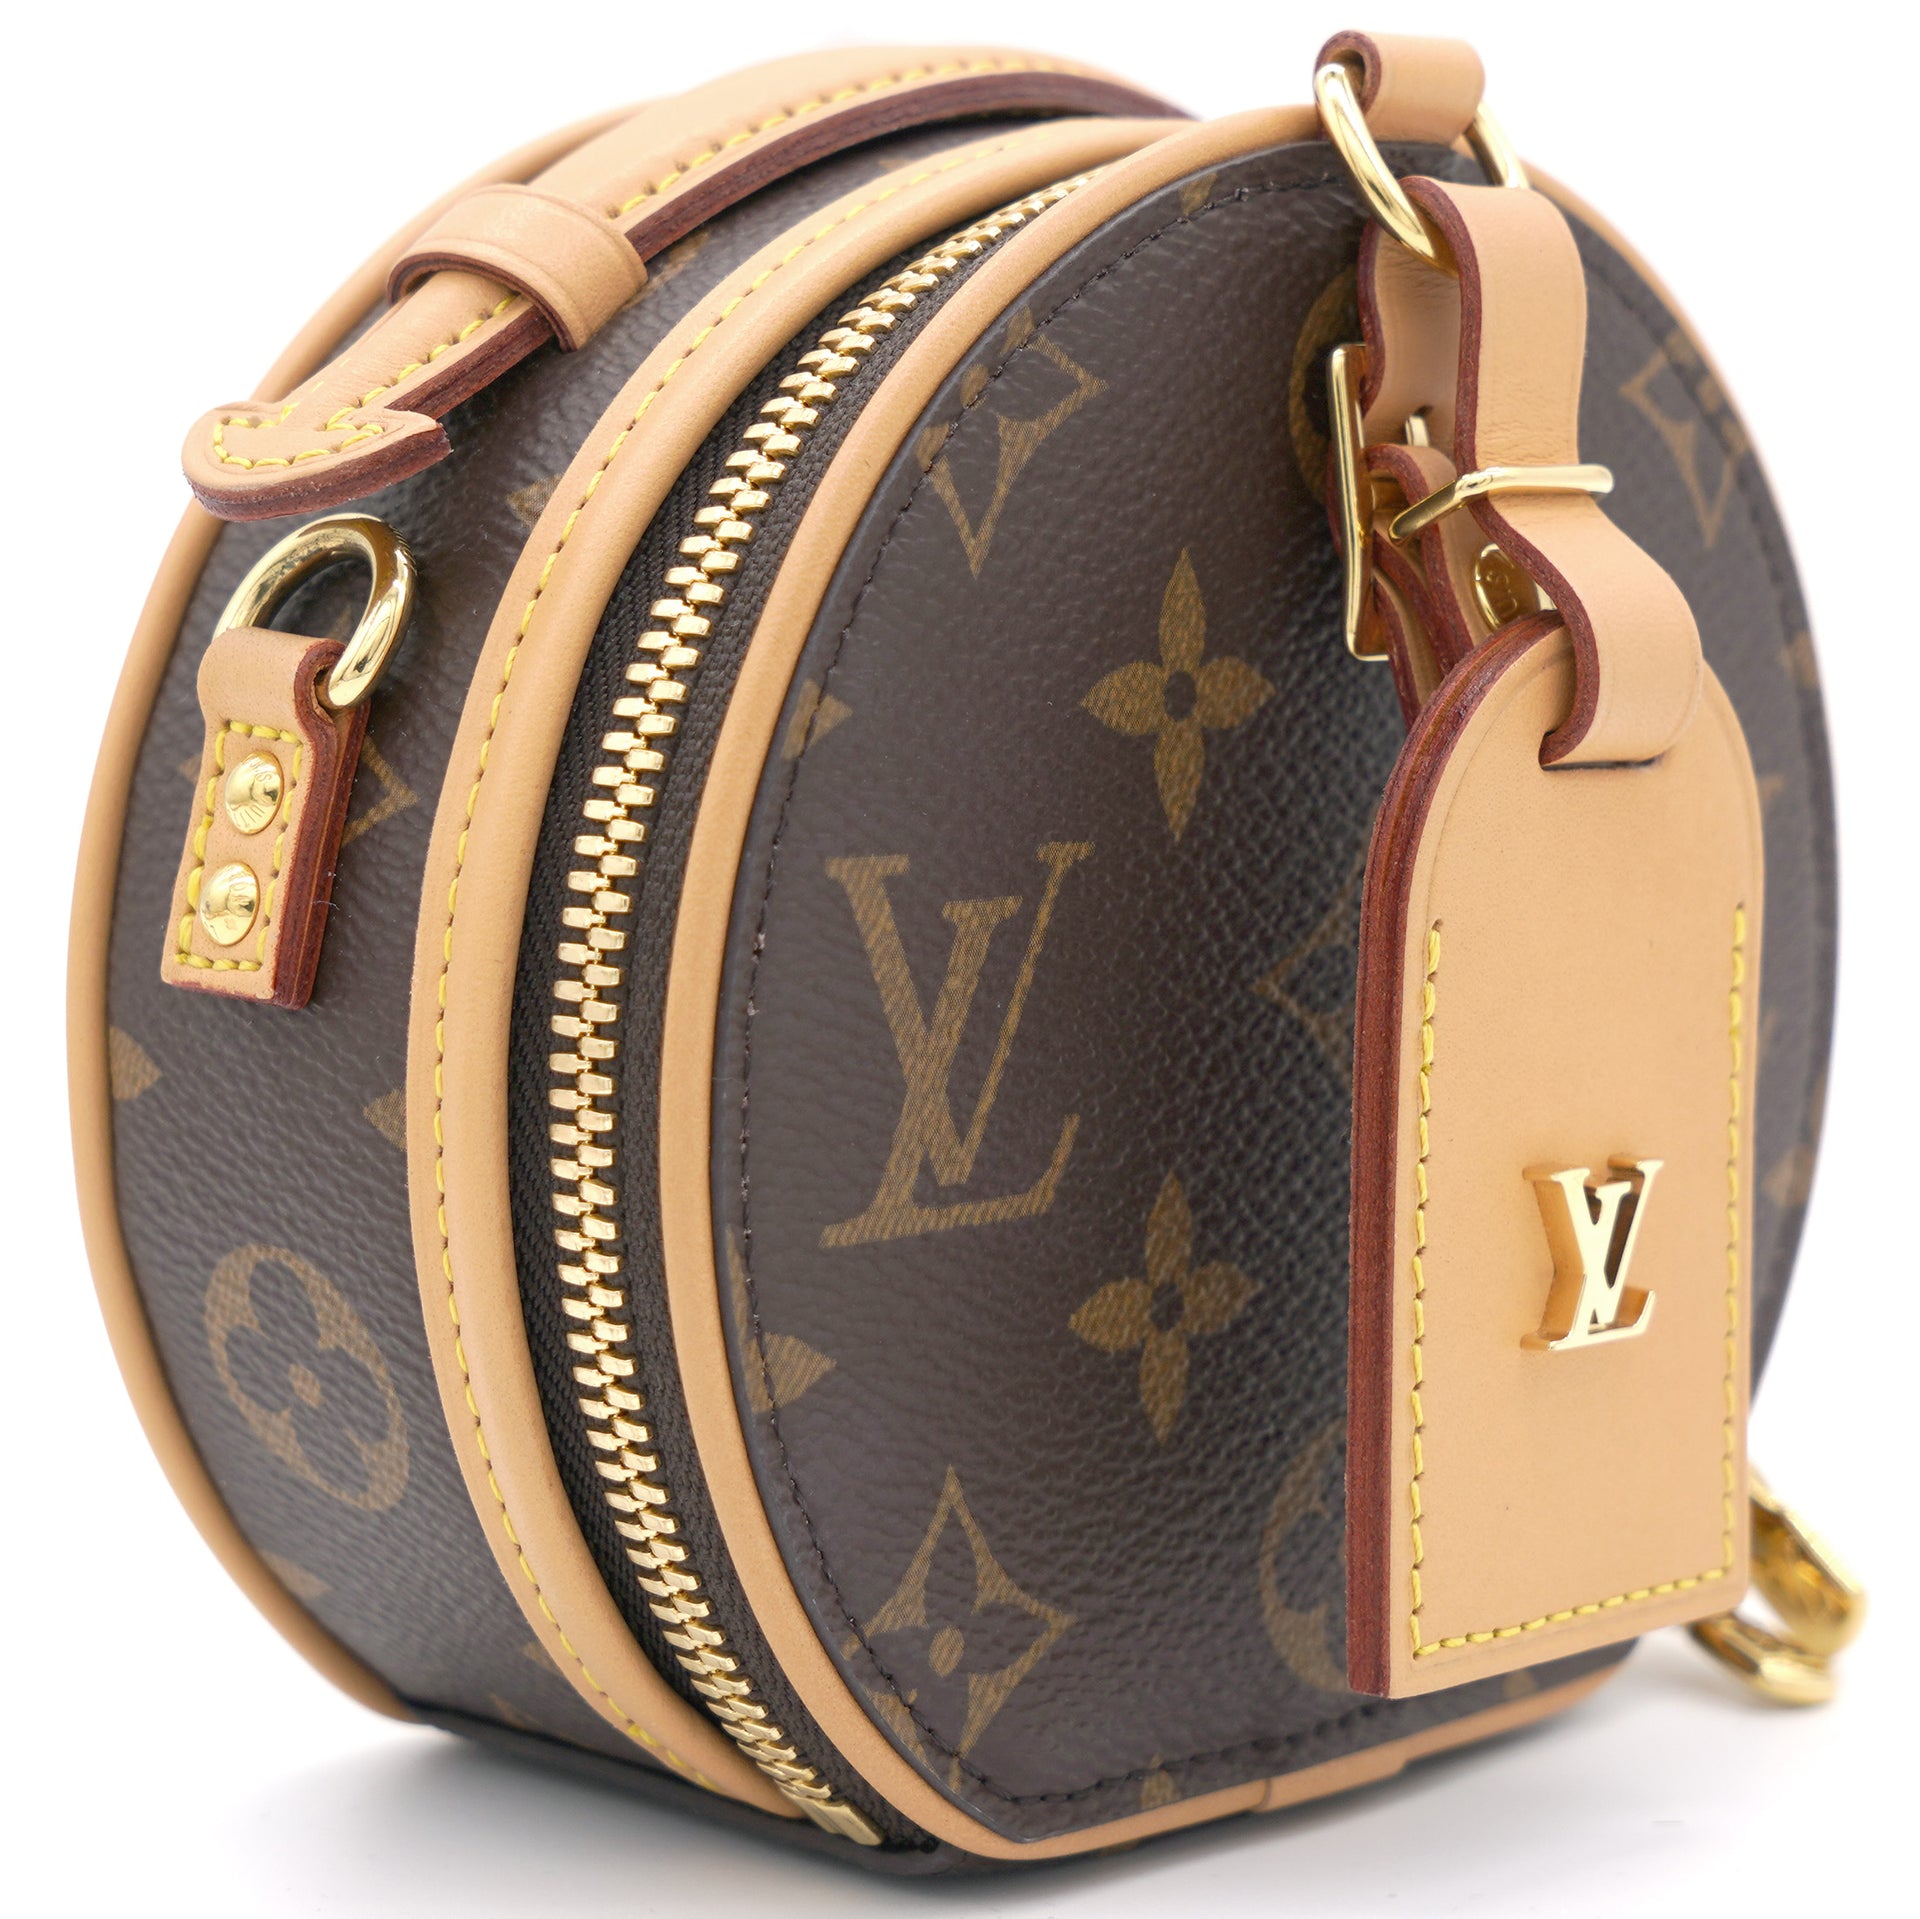 Lv mini round bag